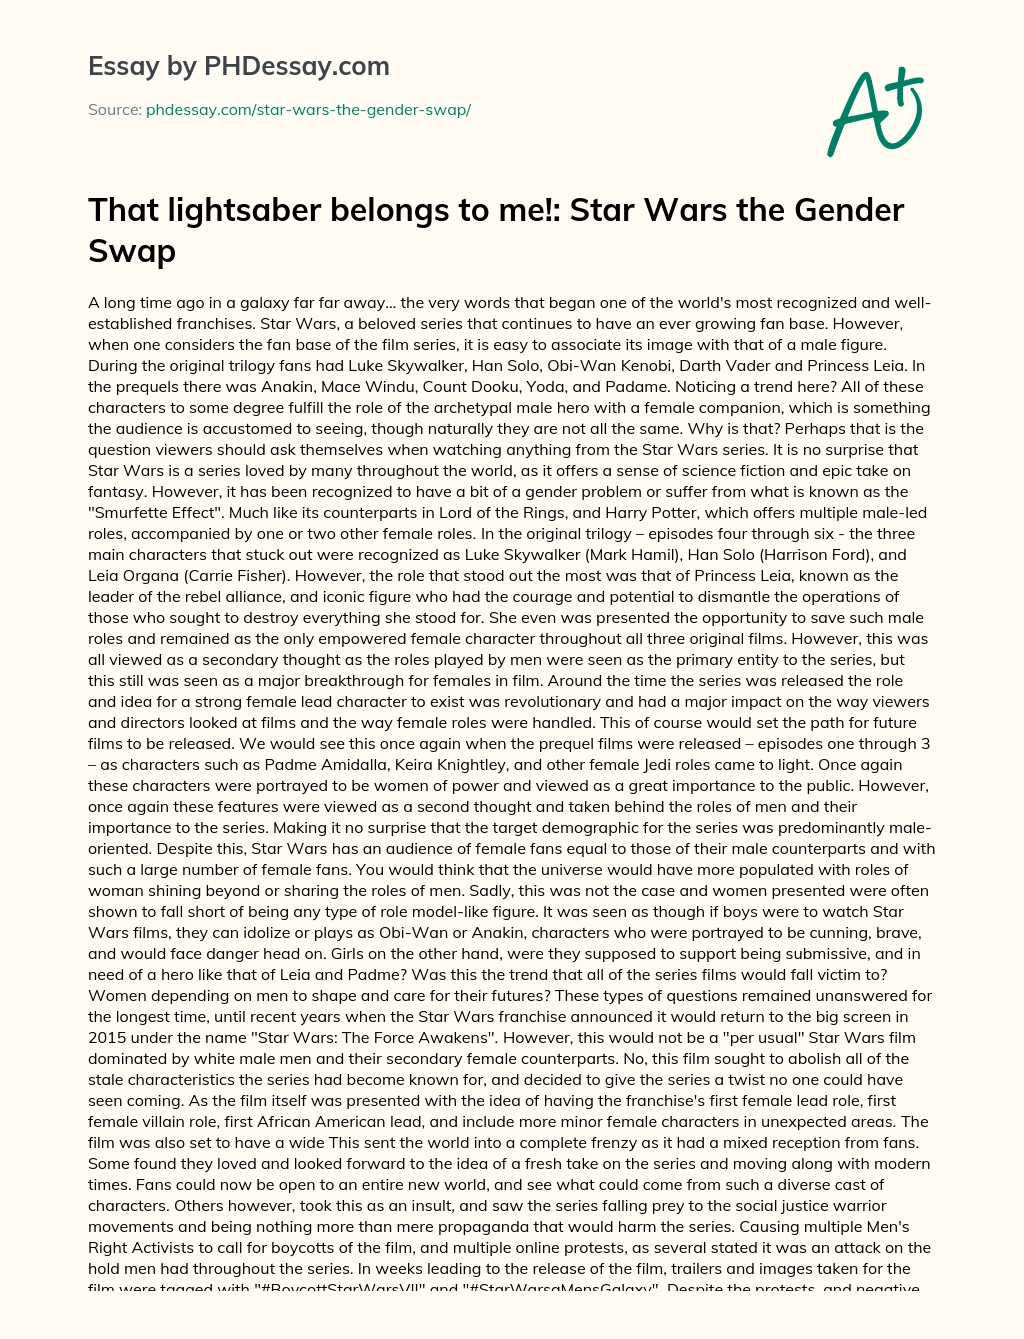 That lightsaber belongs to me!: Star Wars the Gender Swap essay